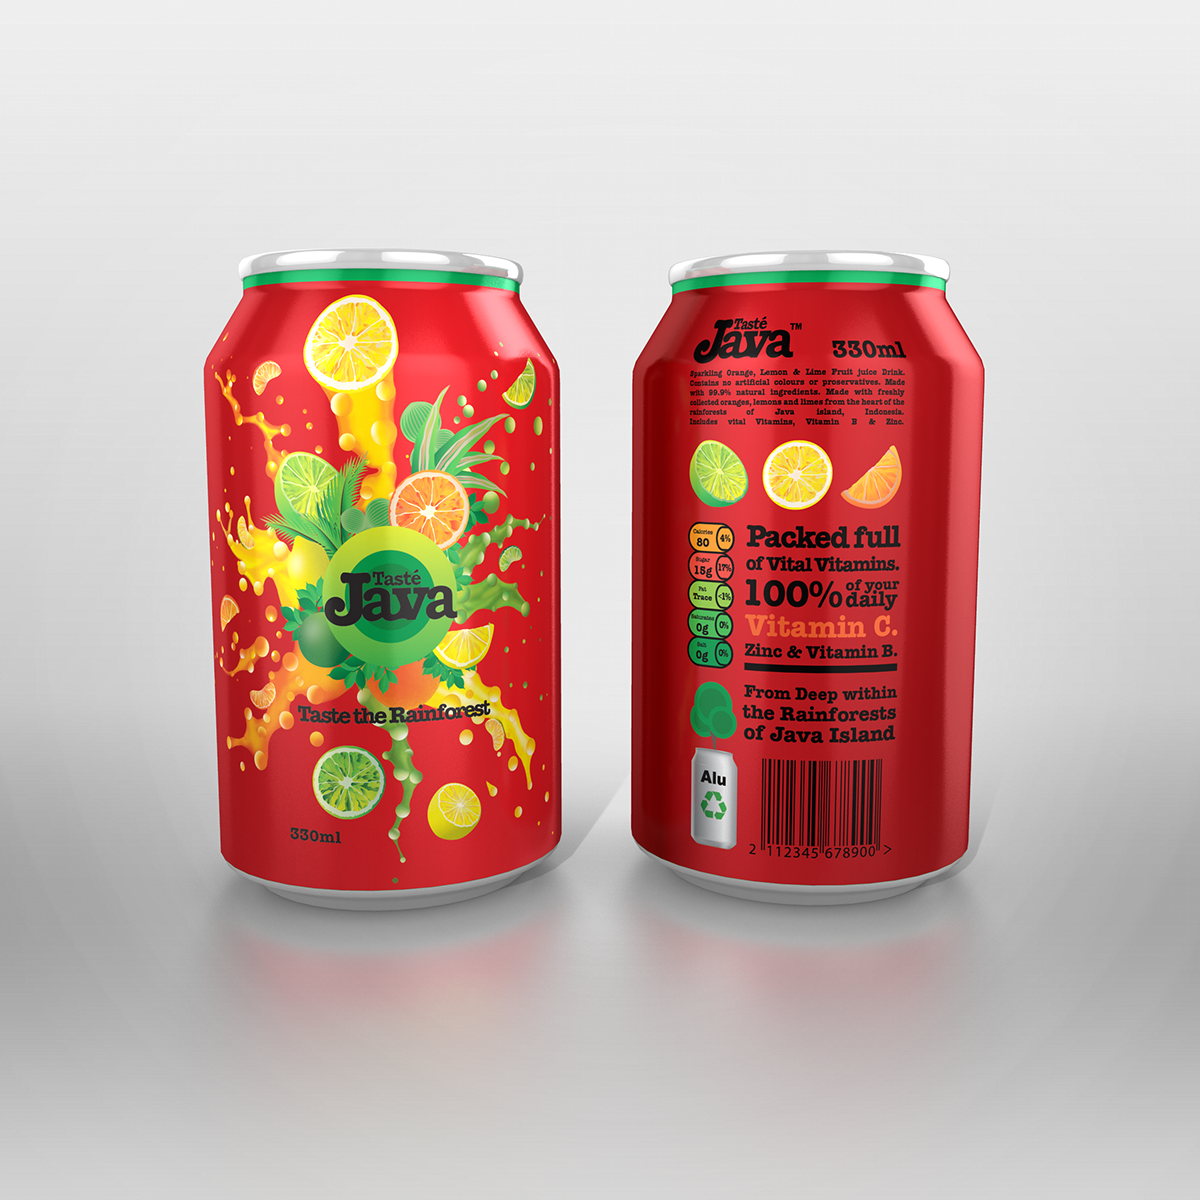 can drink sparkling juice Tropical Island visual Packshot Pack retouch beach Fruit packaging artwork burst splash